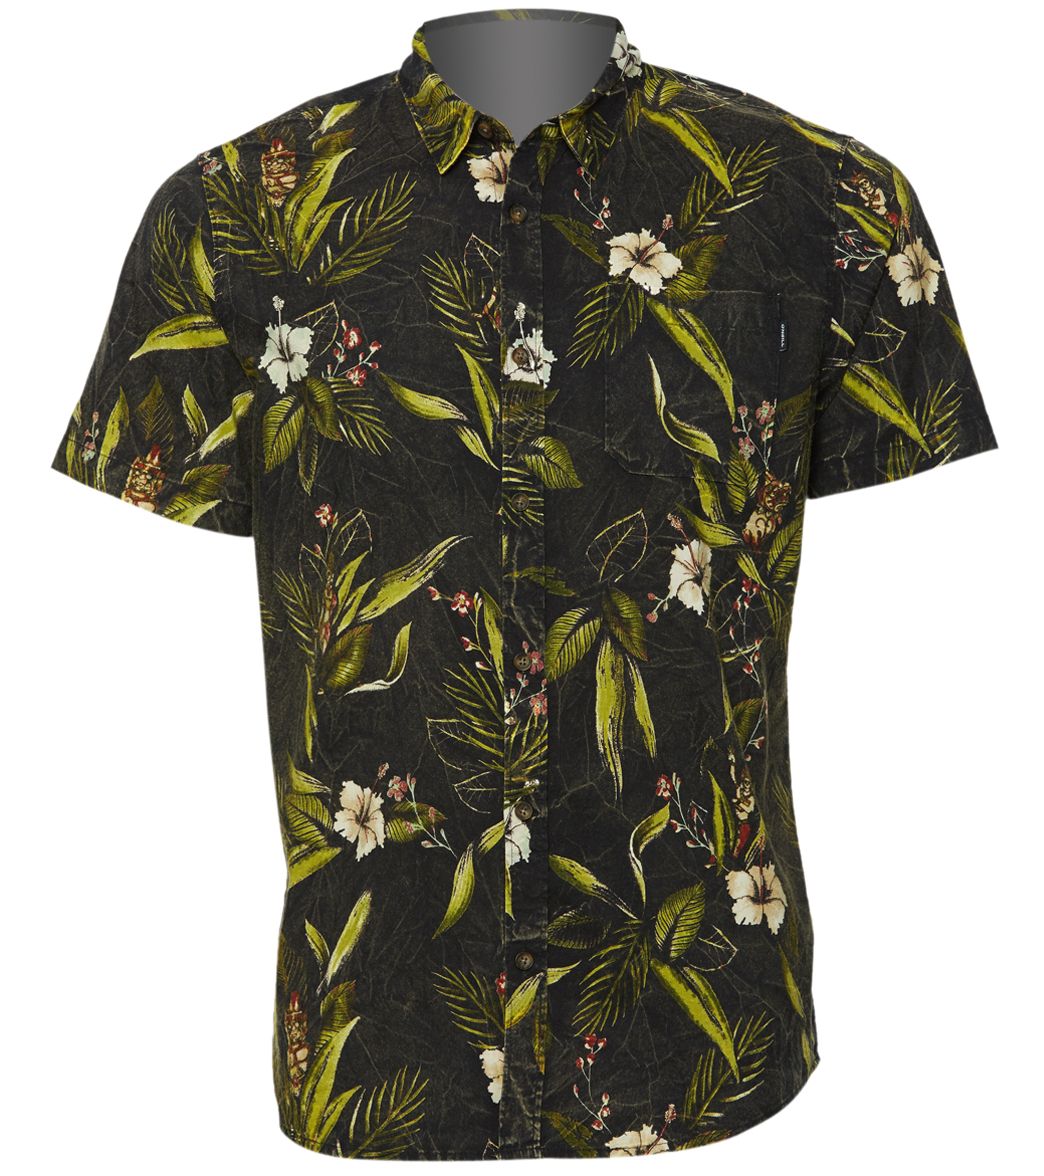 O'neill Bali High Short Sleeve Shirt - Black Small Cotton - Swimoutlet.com